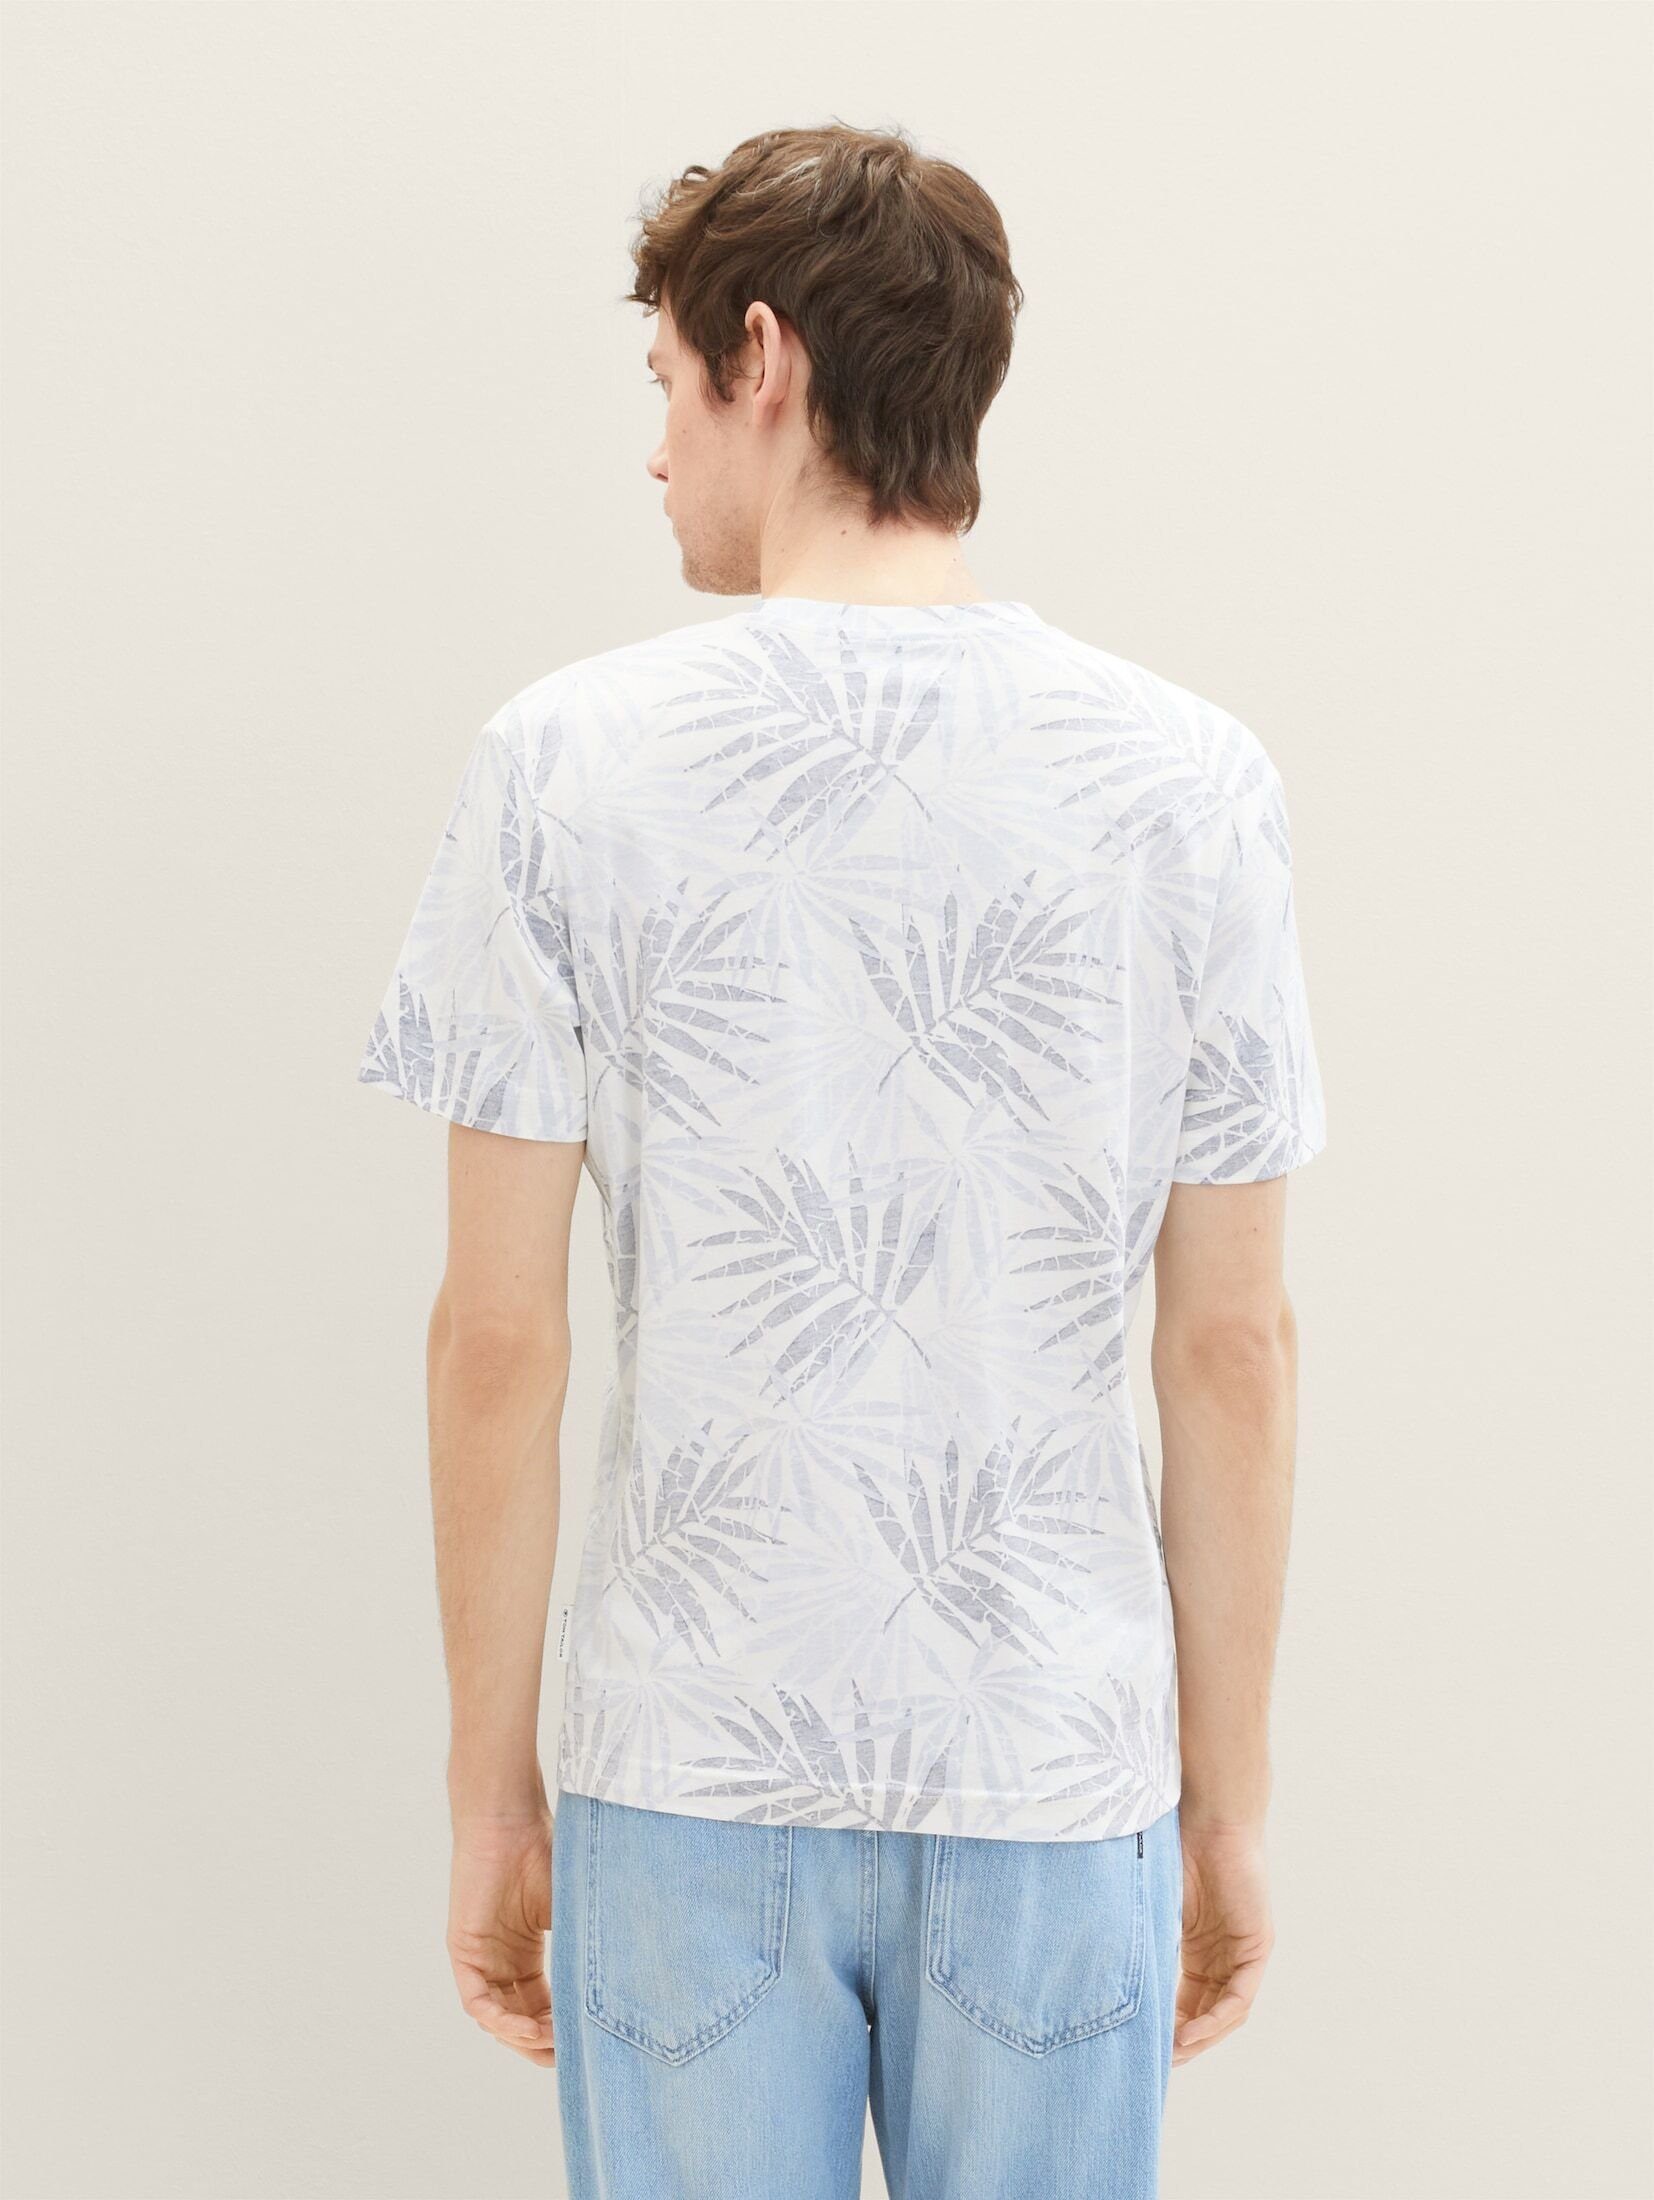 TOM TAILOR T-Shirt leaf blue design Allover-Print tonal light T-Shirt mit